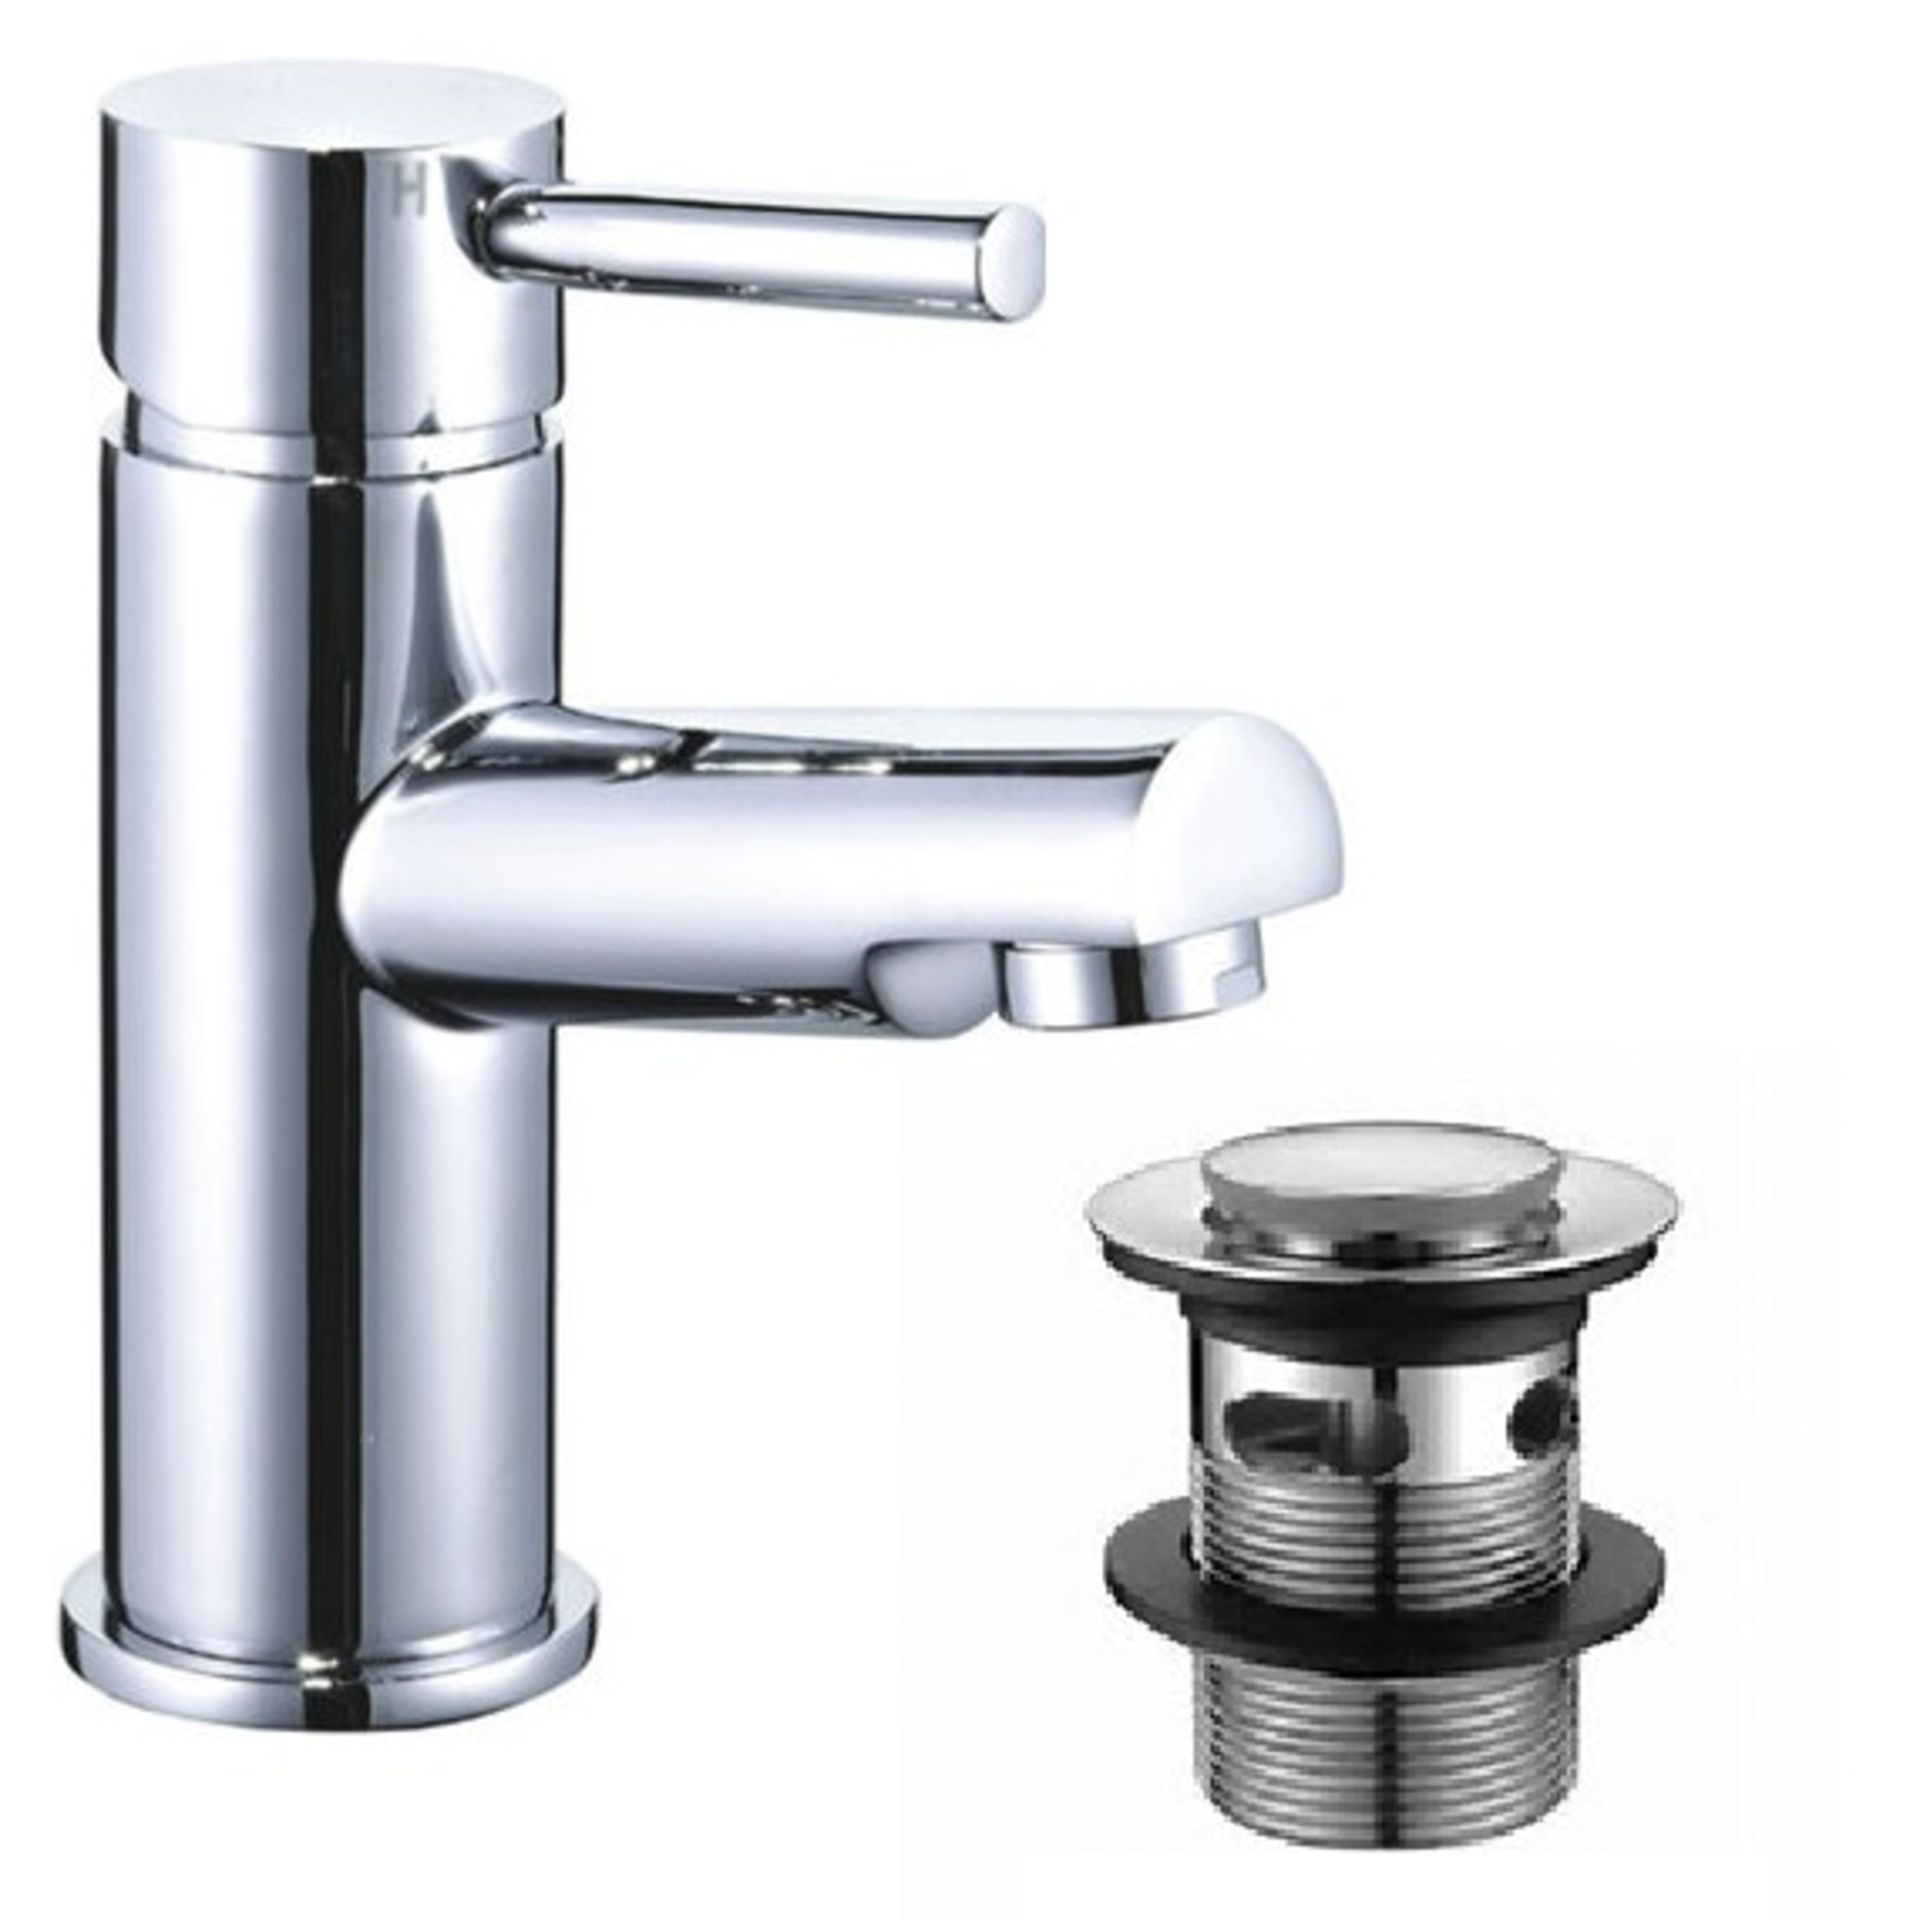 Modern basin mono mixer tap, with click